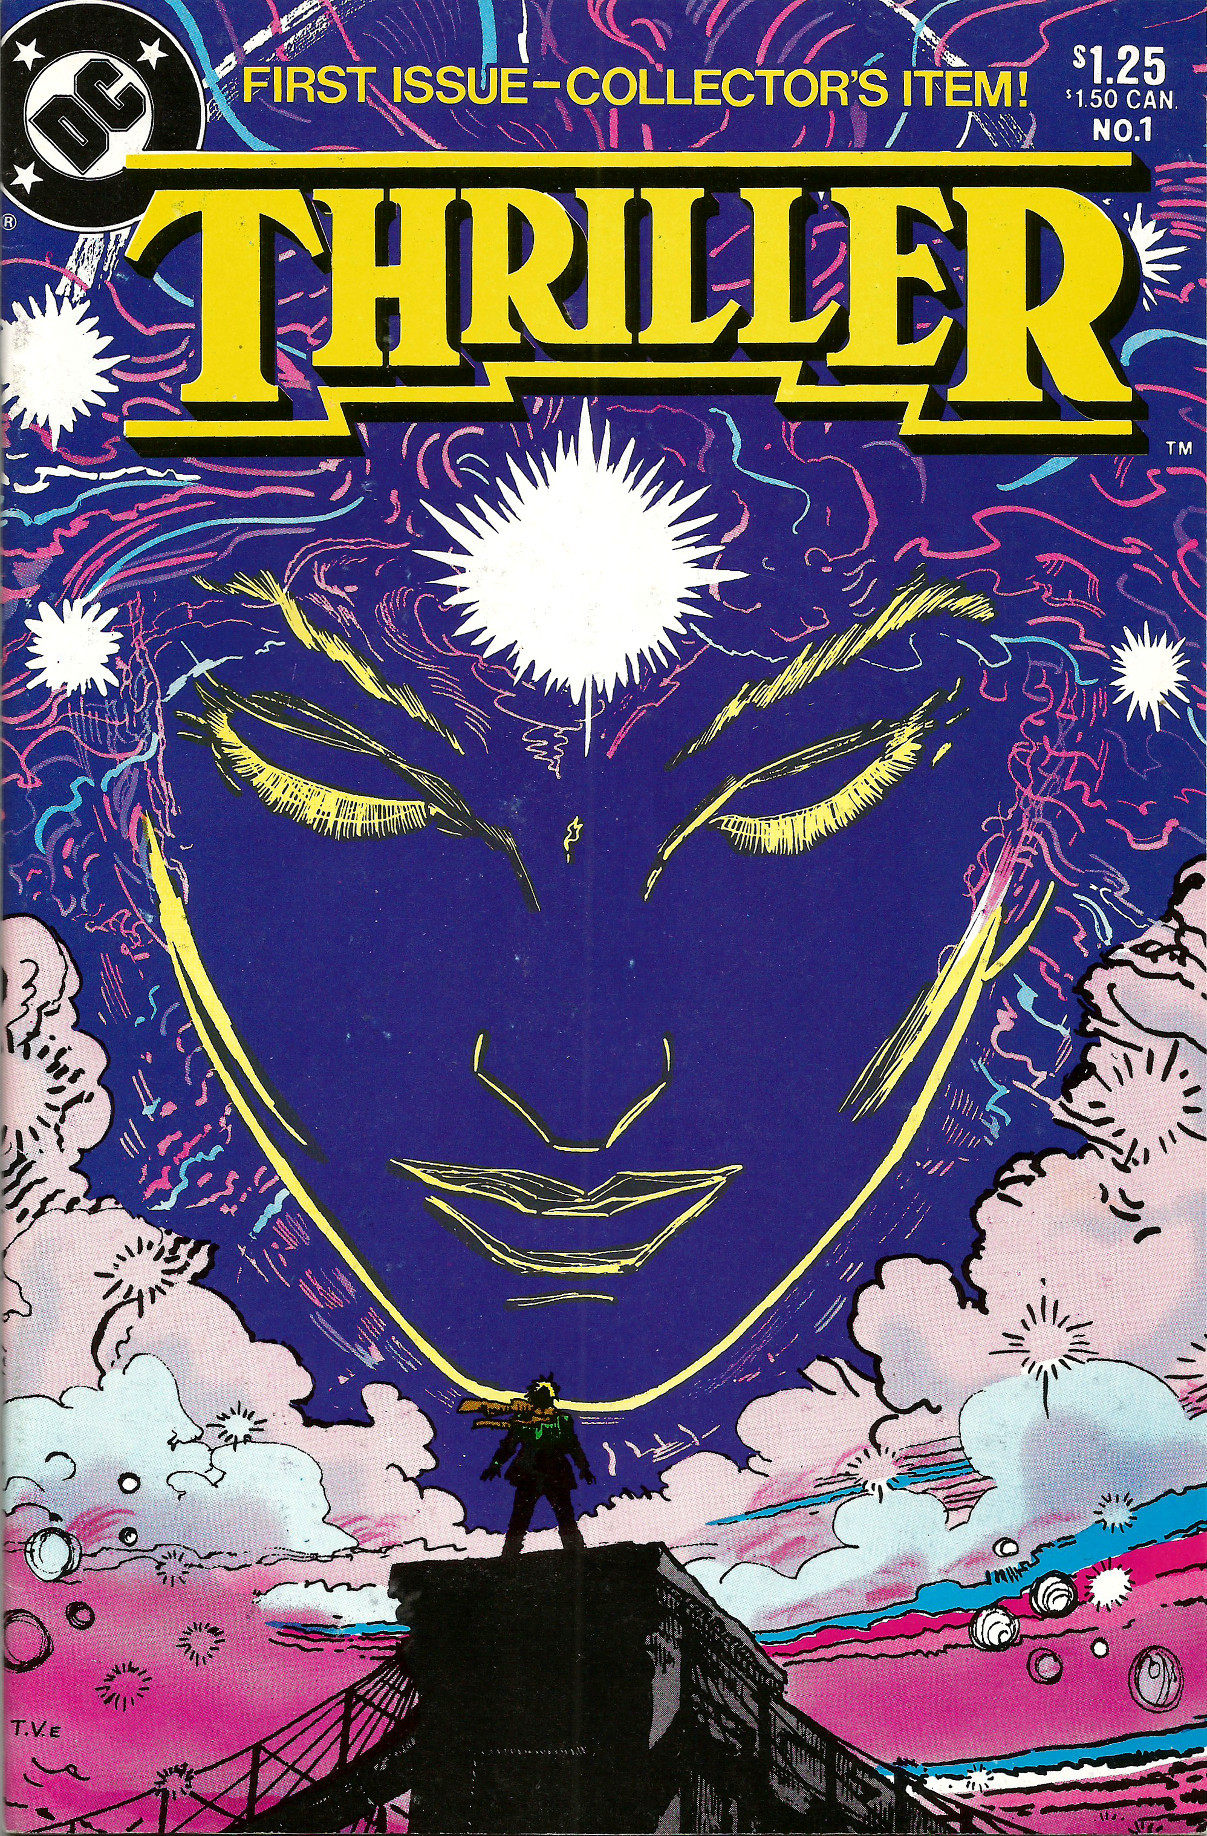 Thriller No. 1 (DC Comics, 1983). Cover art by Trevor von Eeden.From a comic shop